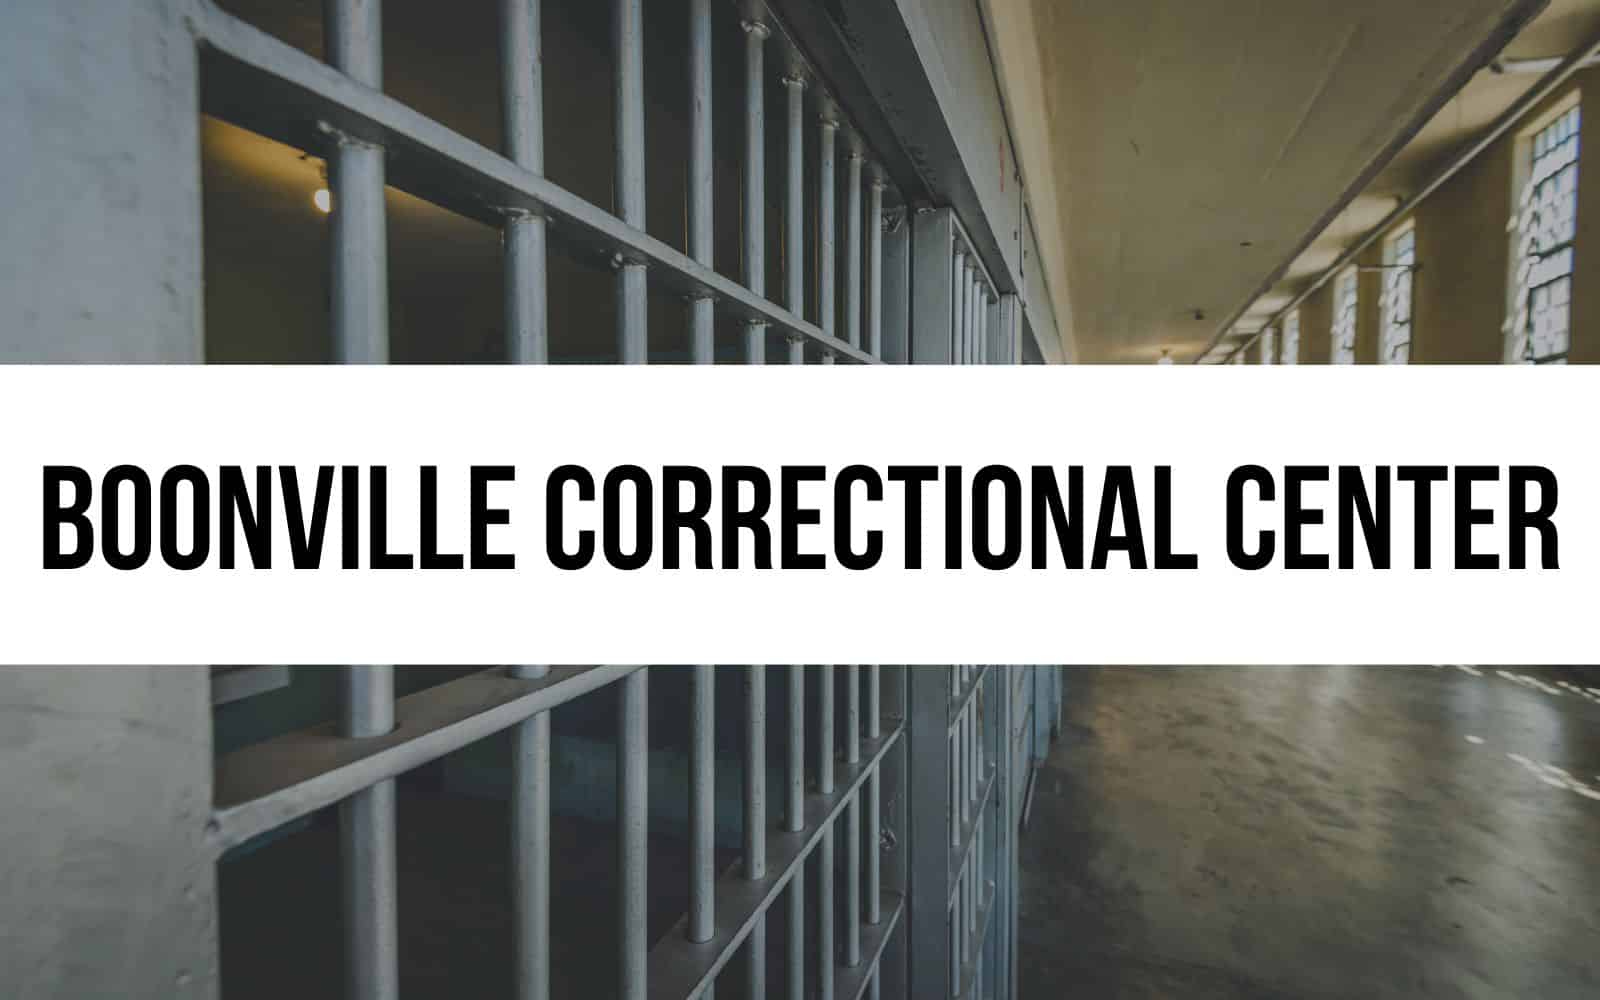 Boonville Correctional Center